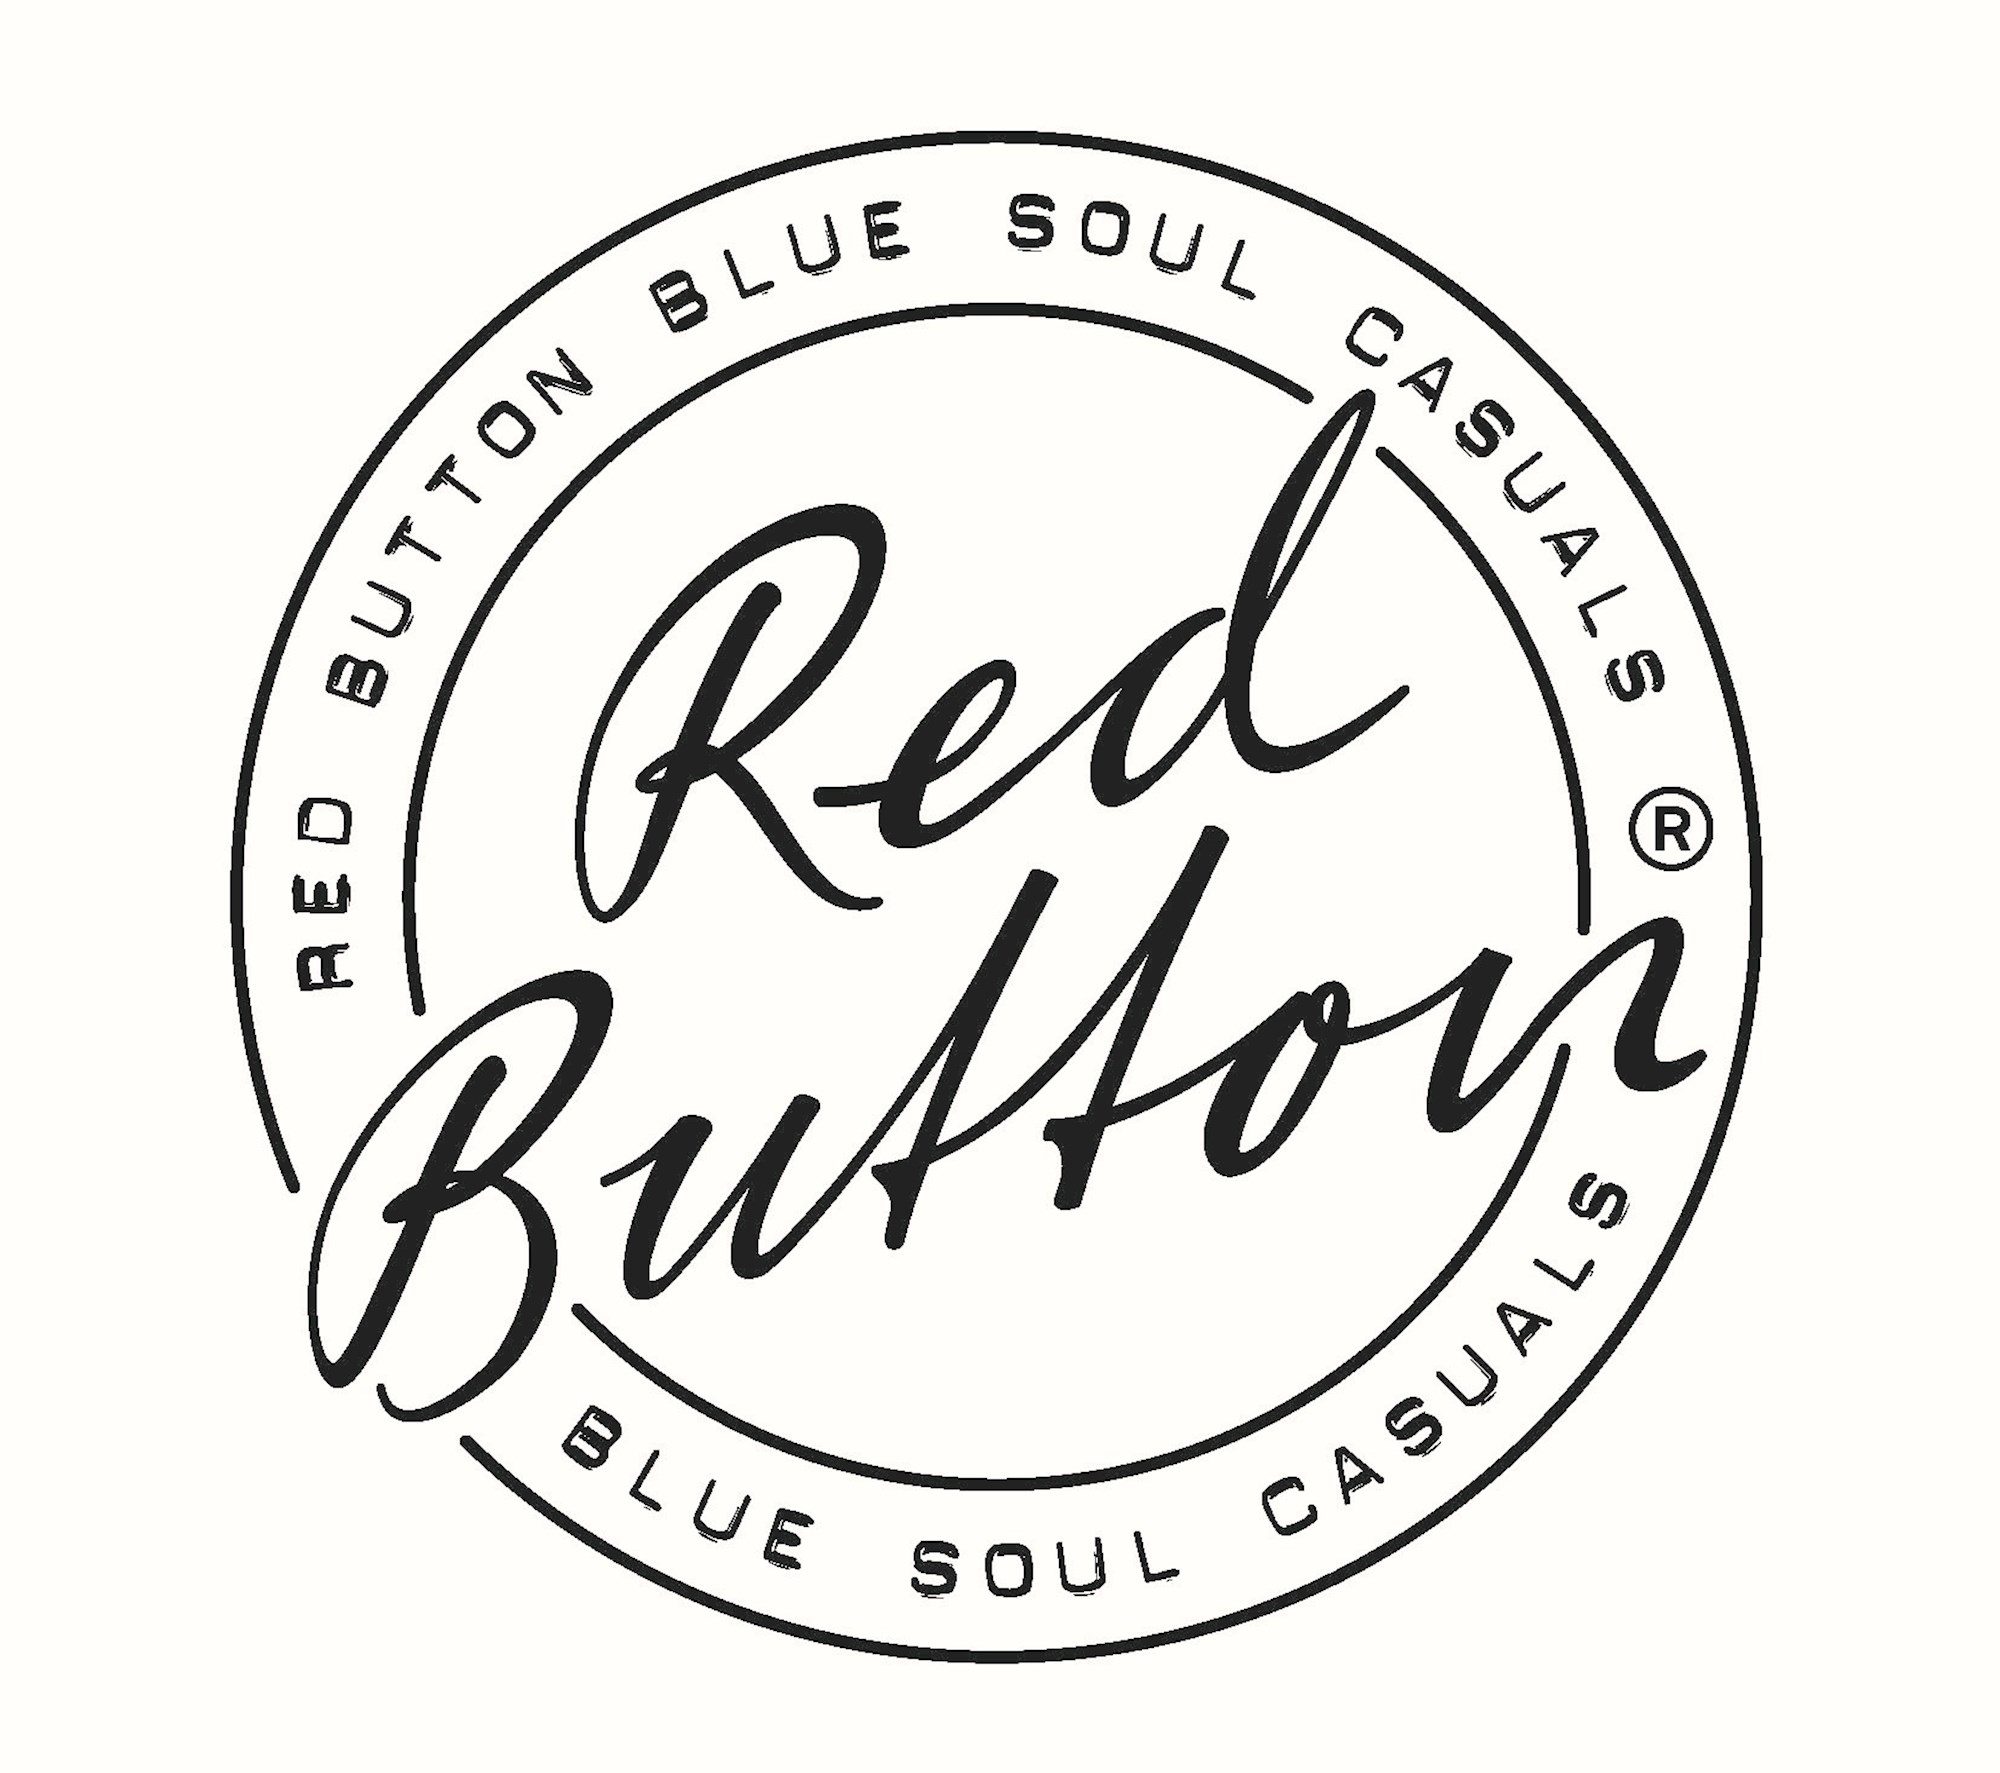 red button logo